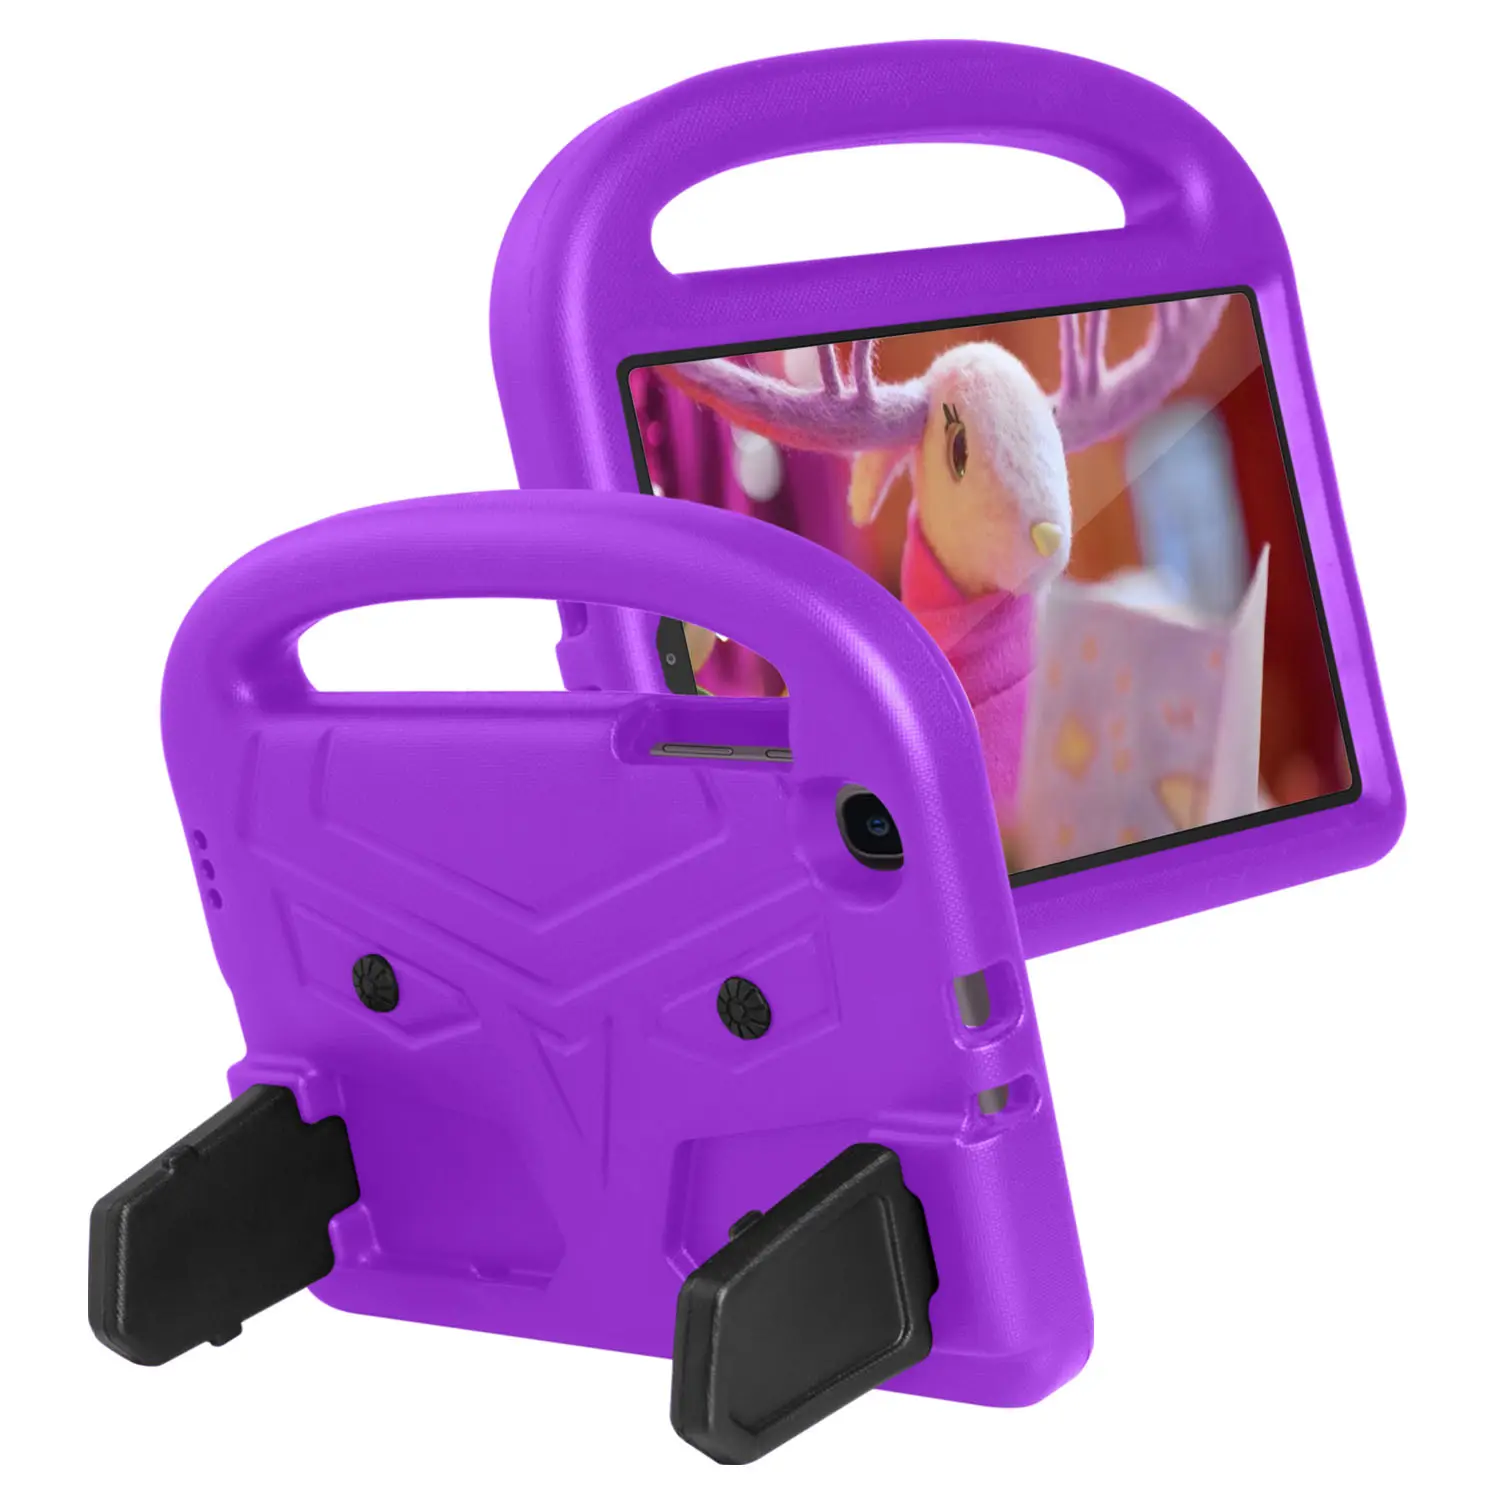 Voor Amazon Kindle Fire Hd 8 2020 Case Ingebouwde Kickstand Eva Silicon Kids Friendly Tablet Case Polsband Shockproof Cover